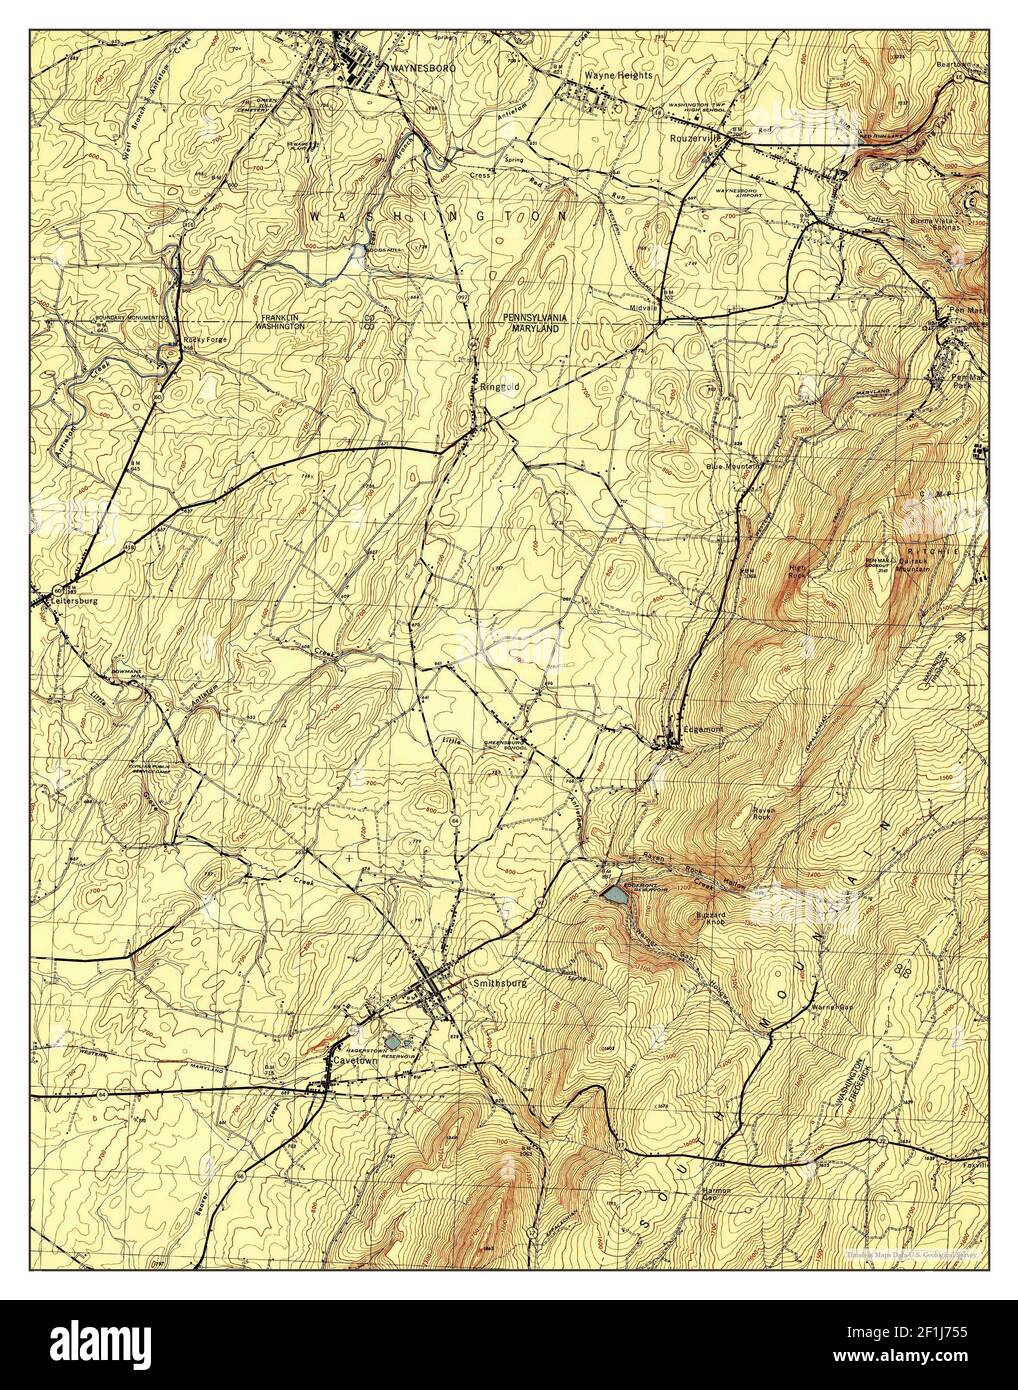 Smithsburg, Maryland, map 1944, 1:31680, United States of America by Timeless Maps, data U.S. Geological Survey Stock Photo